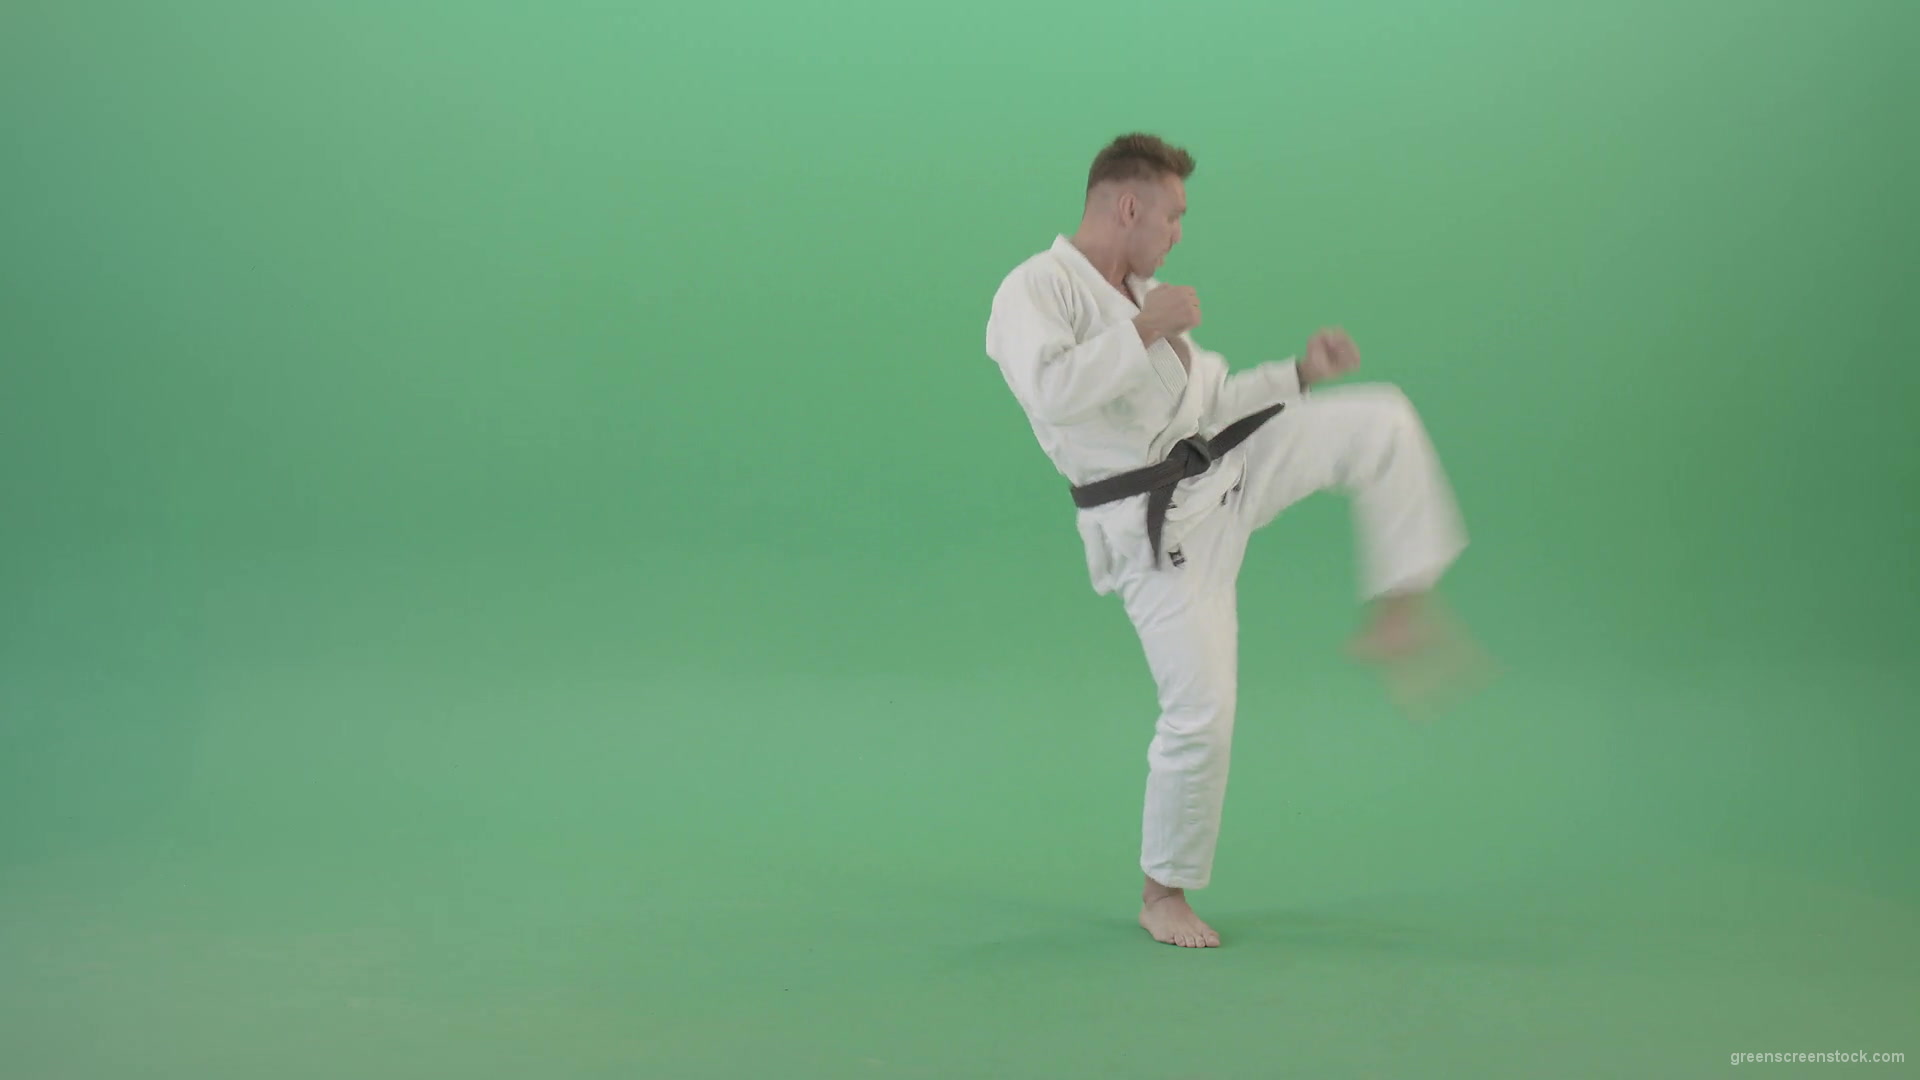 Jujutsu-Sportman-training-isolated-on-green-screen-4K-Video-Footage-1920_004 Green Screen Stock